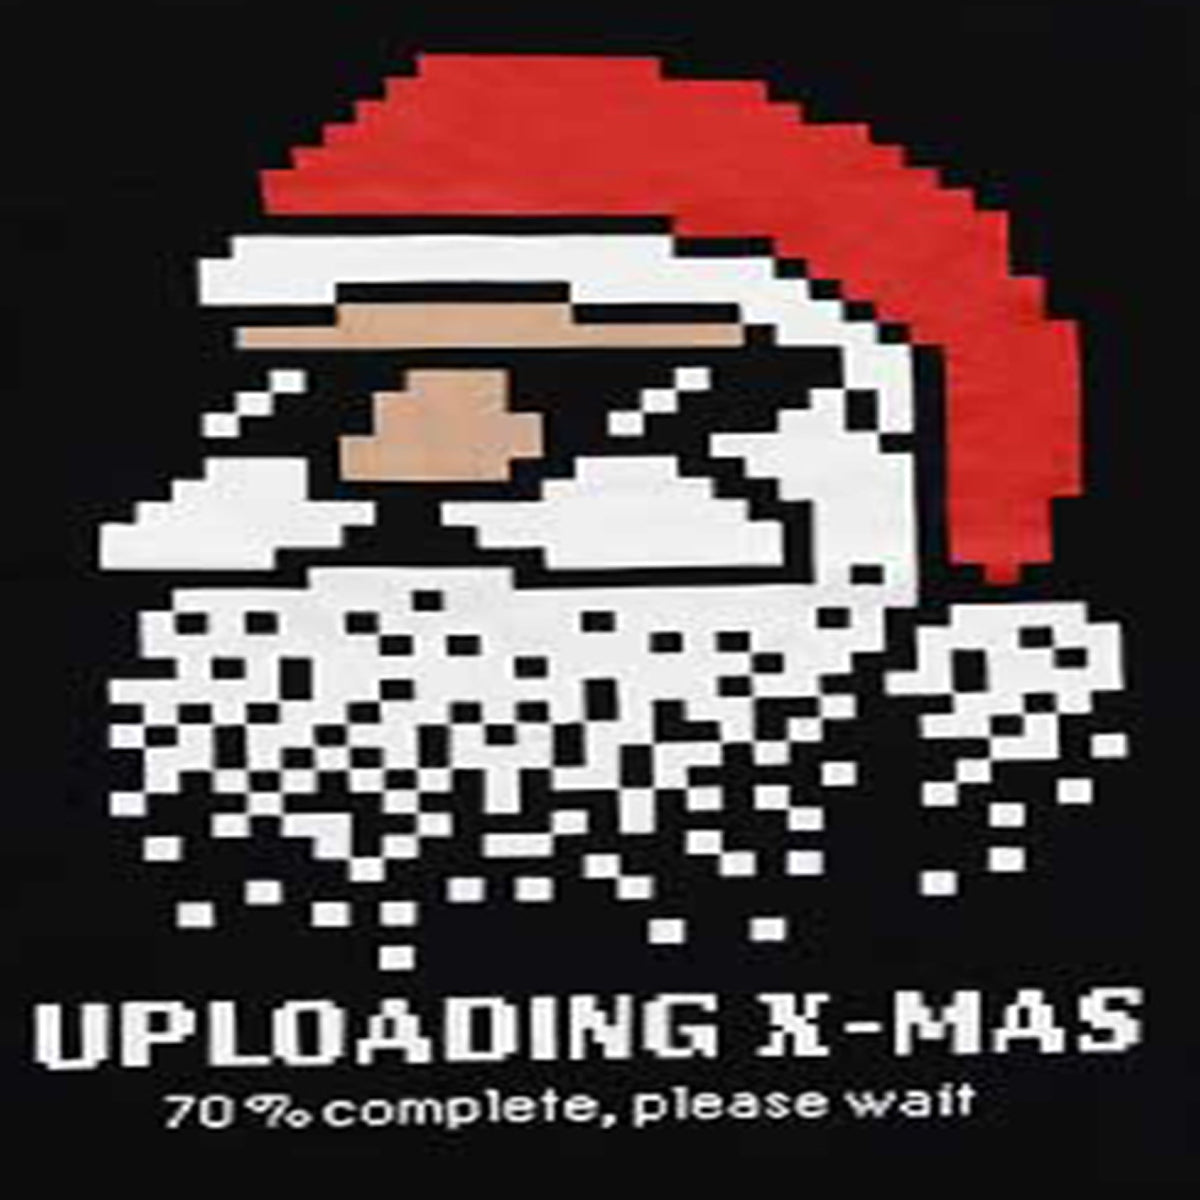 Boys T-Shirt with Pixel Santa - 'Uploading X-Mas' Design - Casual Holiday Wear